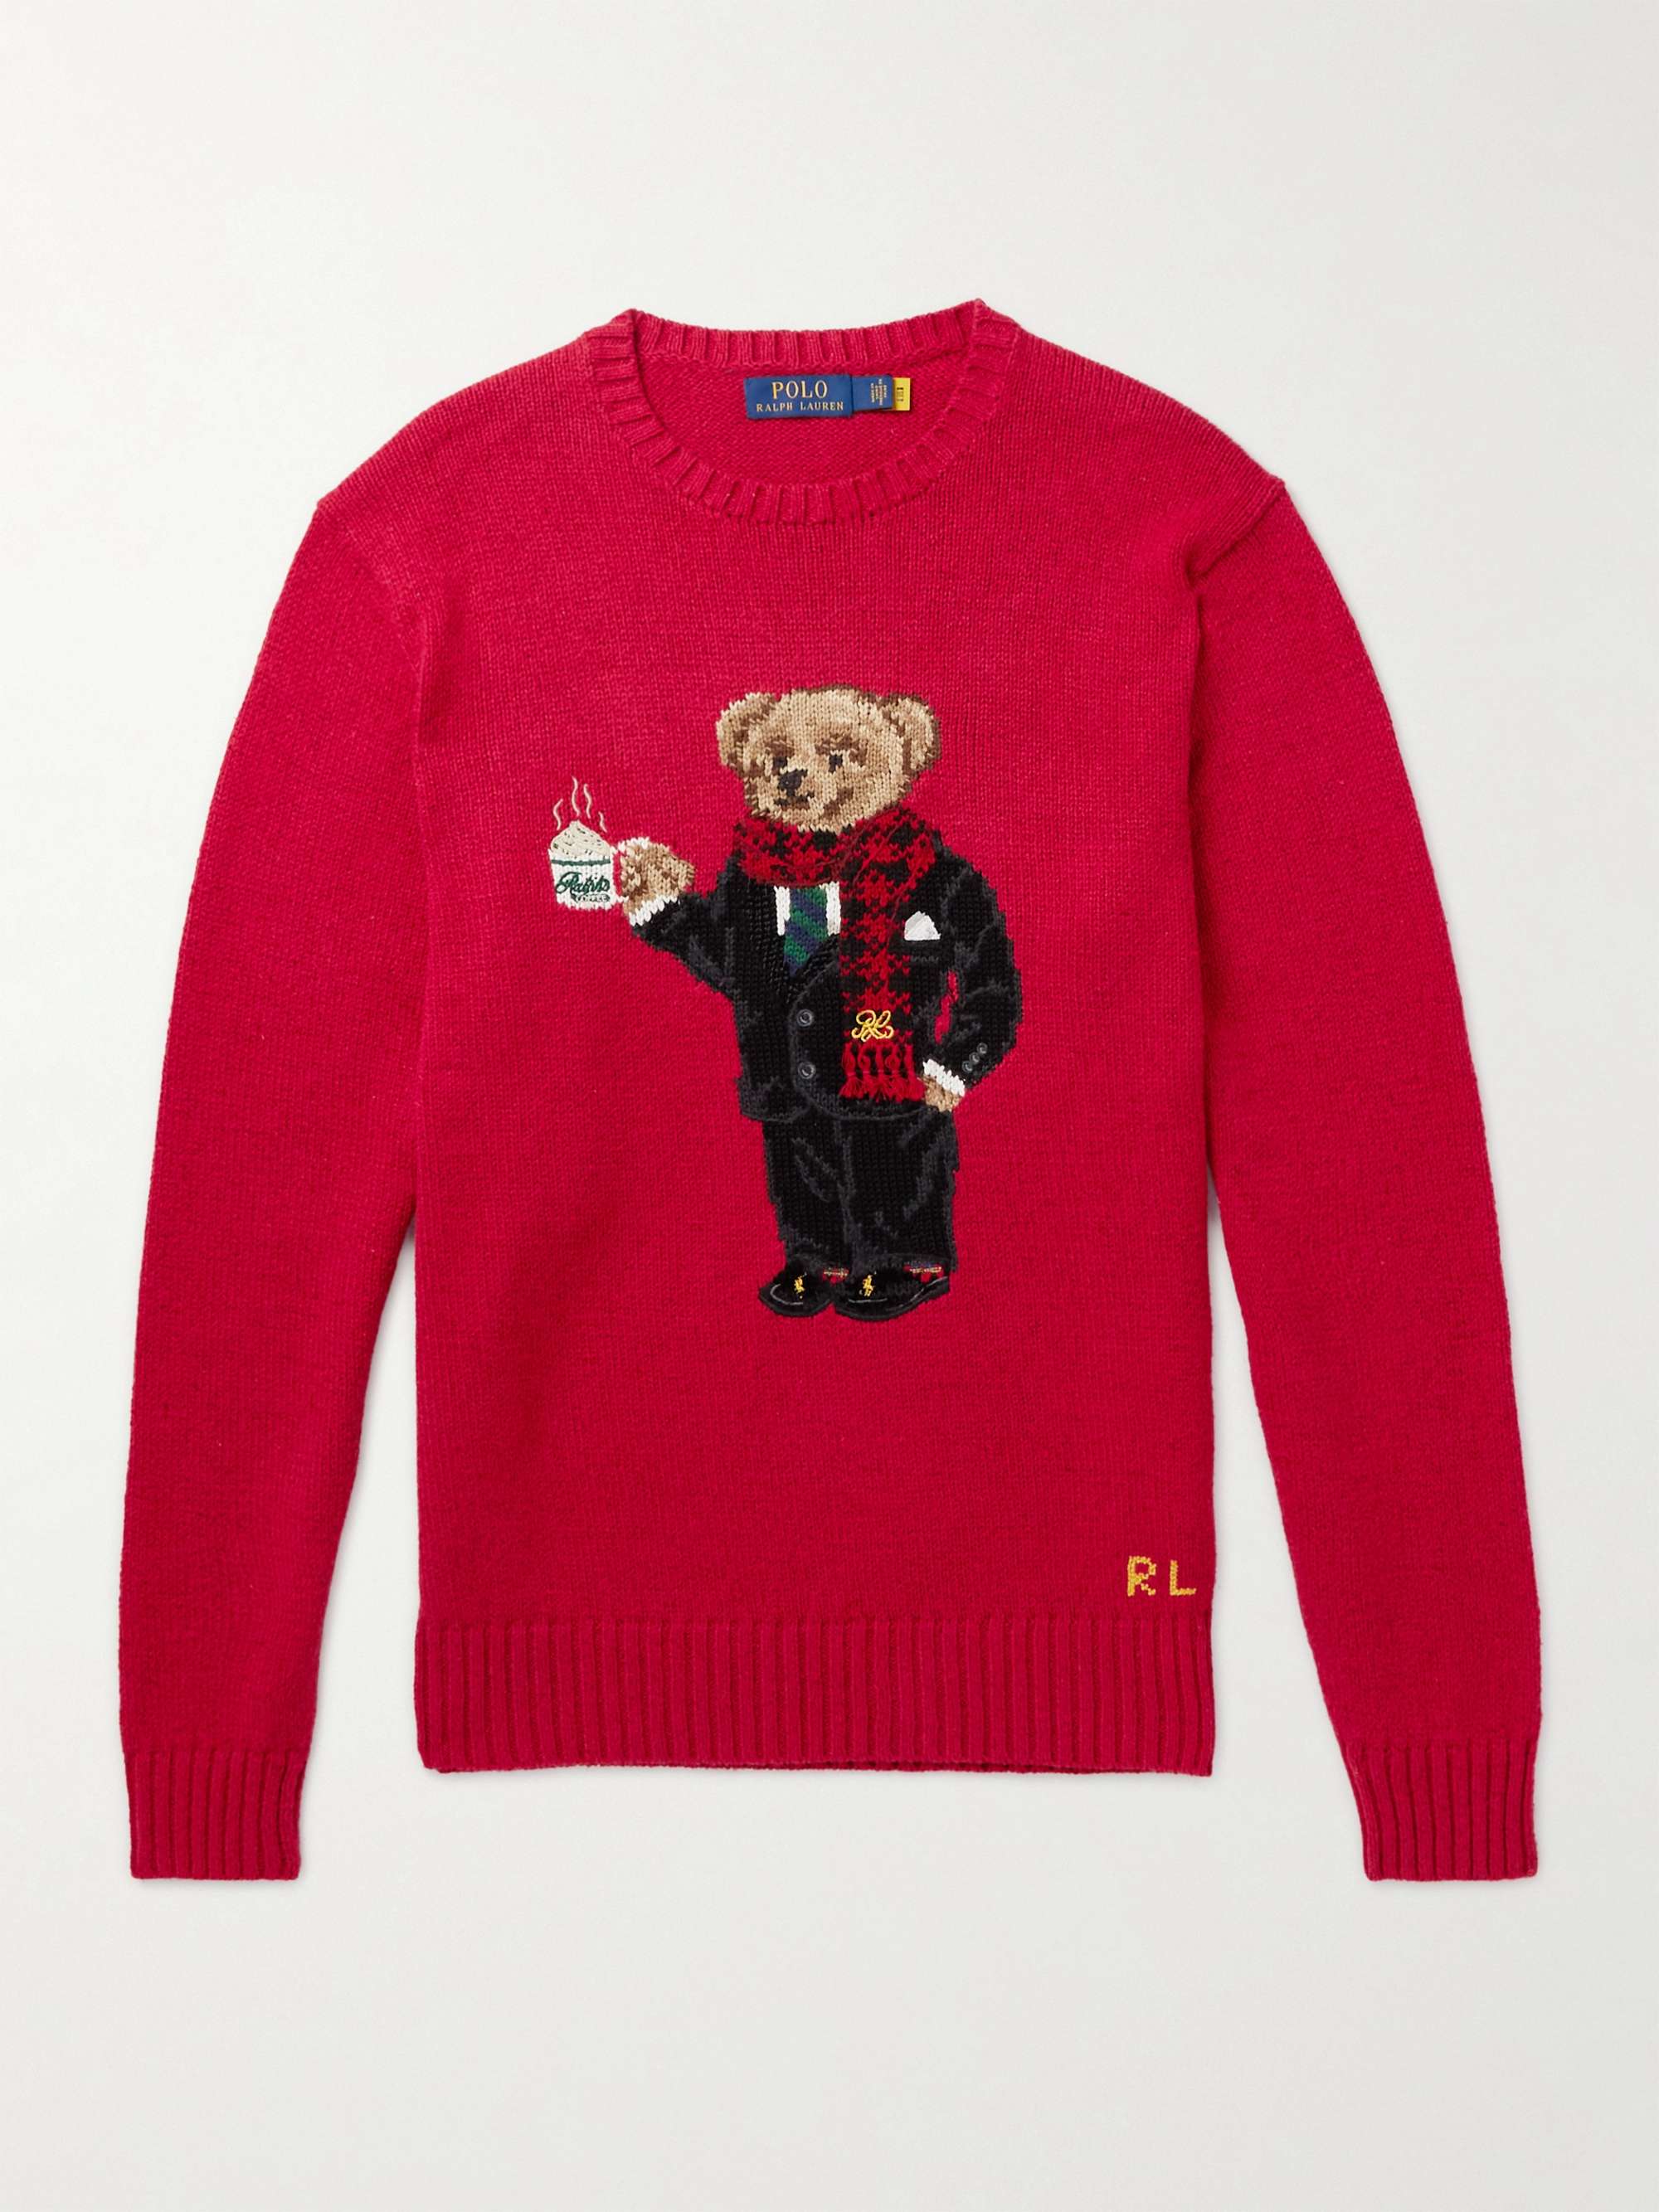 Red Intarsia Cotton-Blend Sweater | POLO RALPH LAUREN | MR PORTER